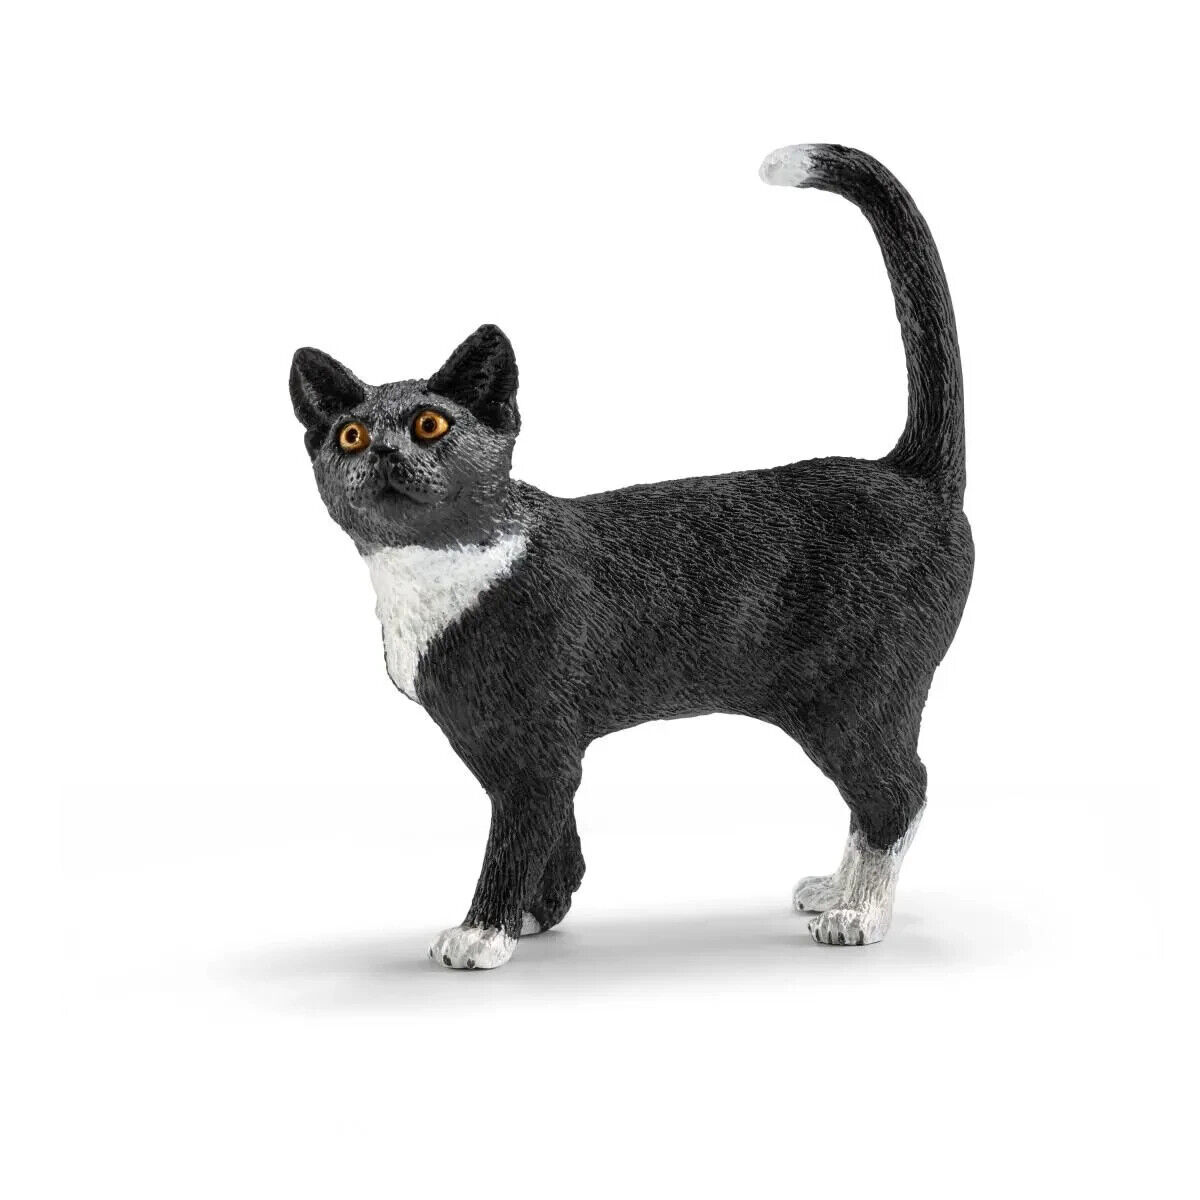 BRAND NEW Mini Standing Black Cat Figurine by Schleich  2.4” H x 2.2” L